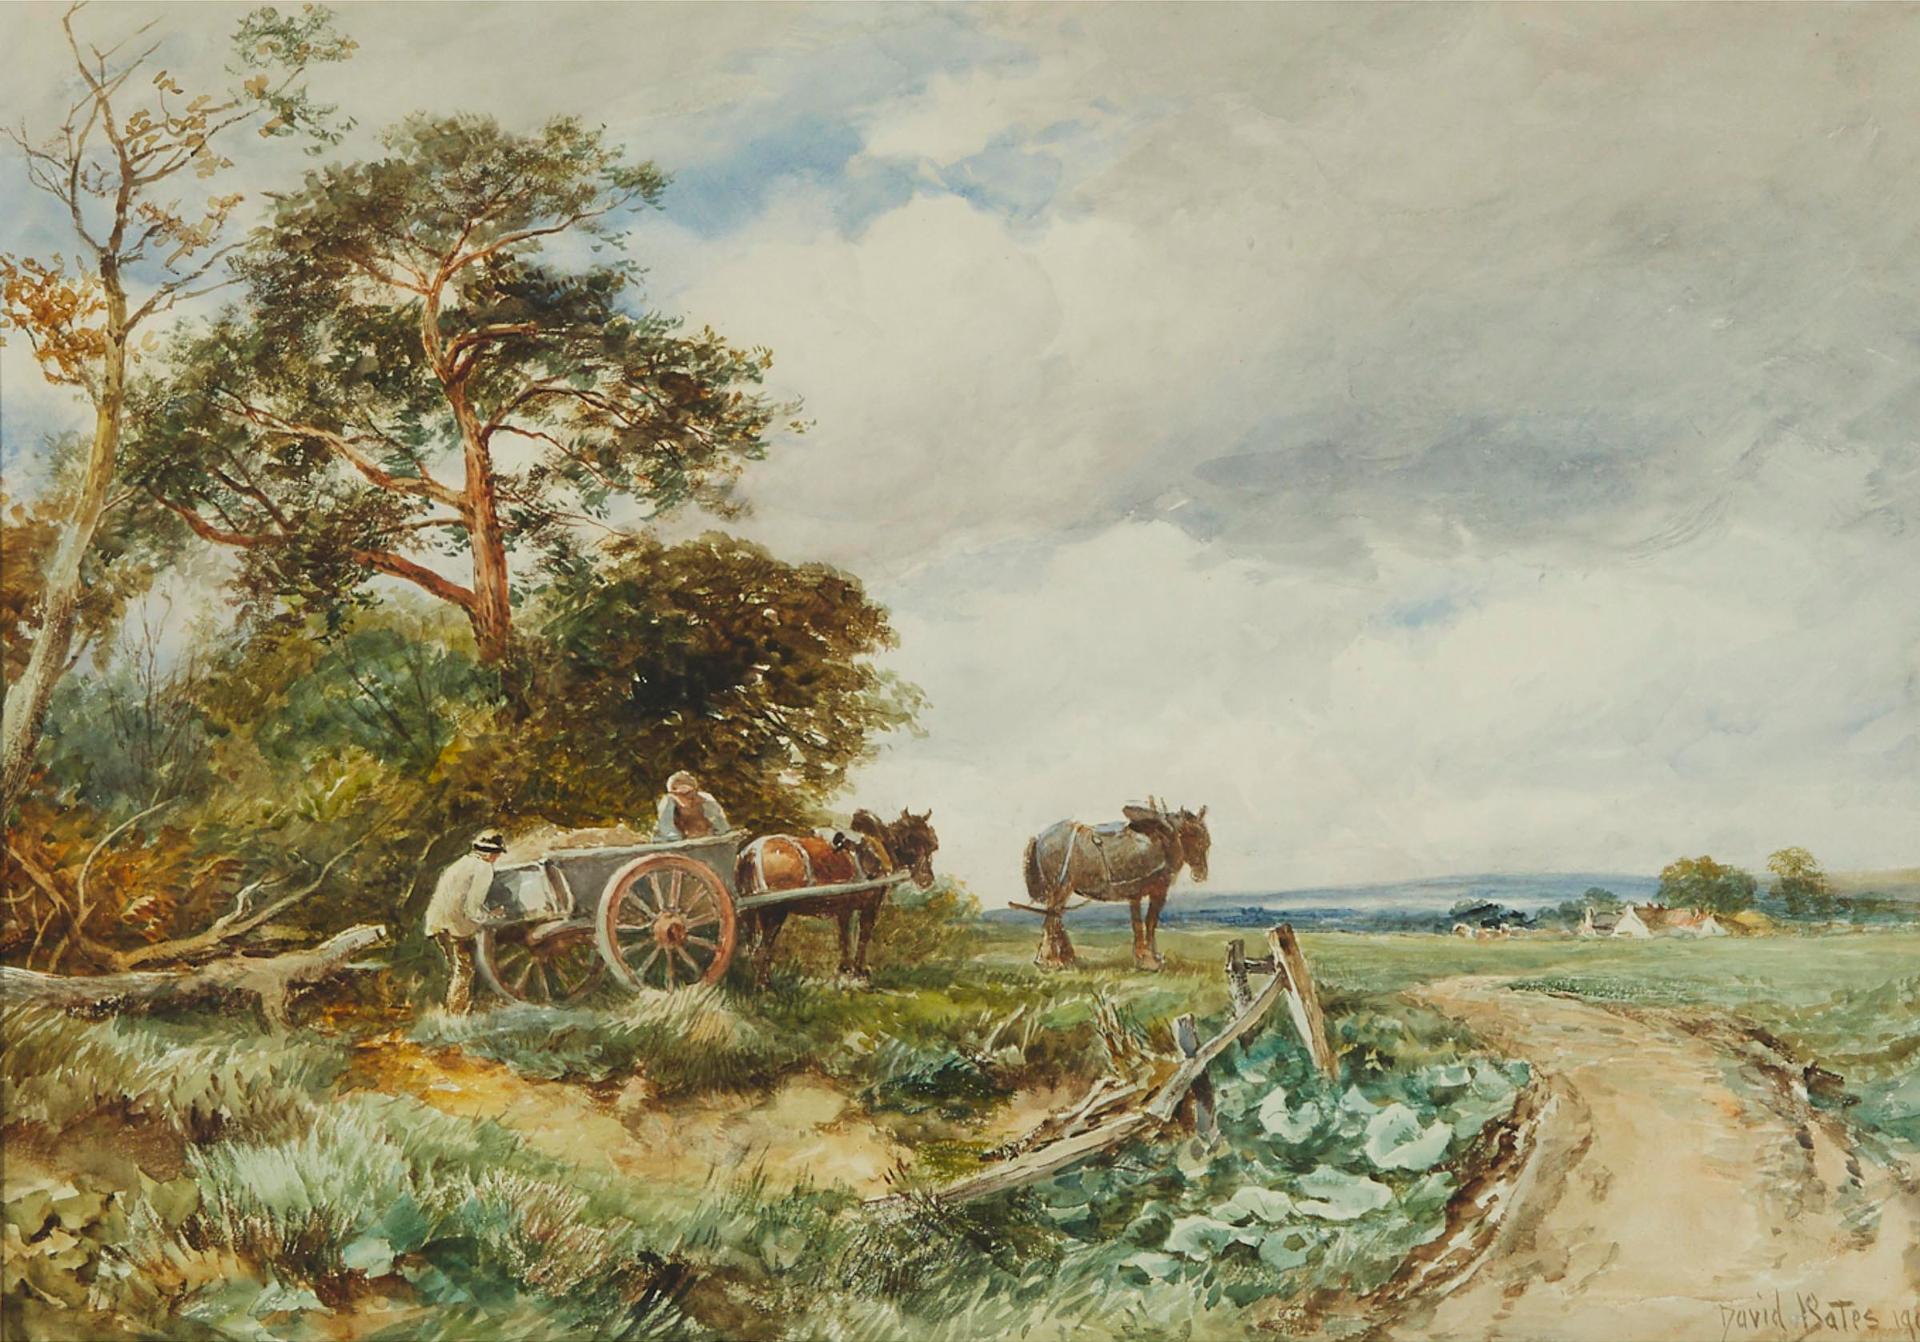 David Bates (1840-1921) - Near Sennybridge (Farmers Loading Cart In The County Of Brecknockshire, Wales), 1908